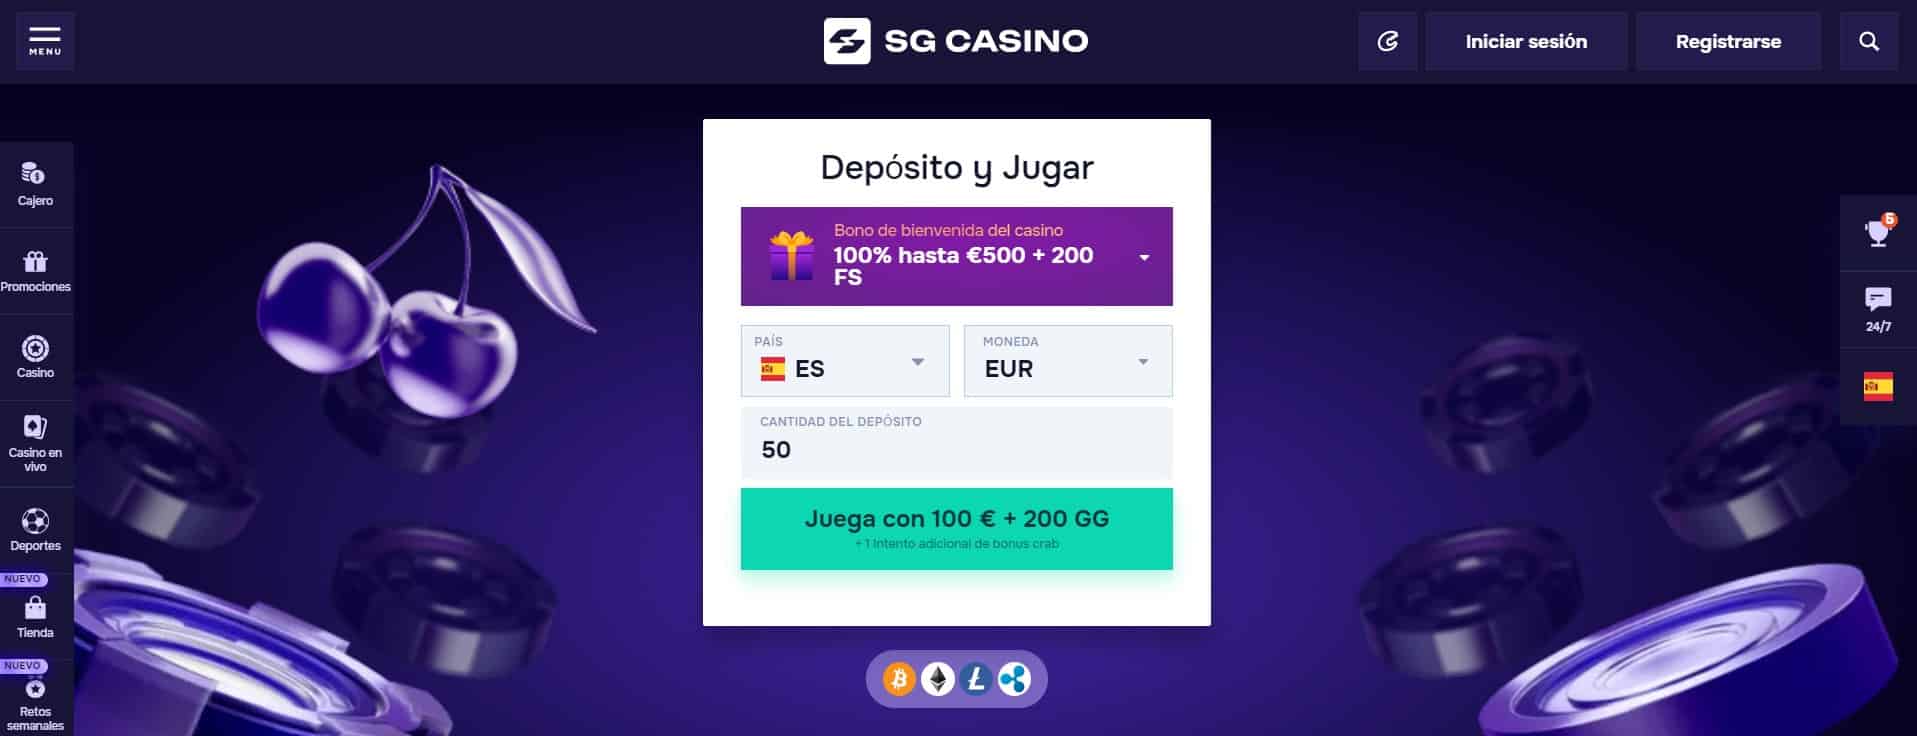 SG casino main page